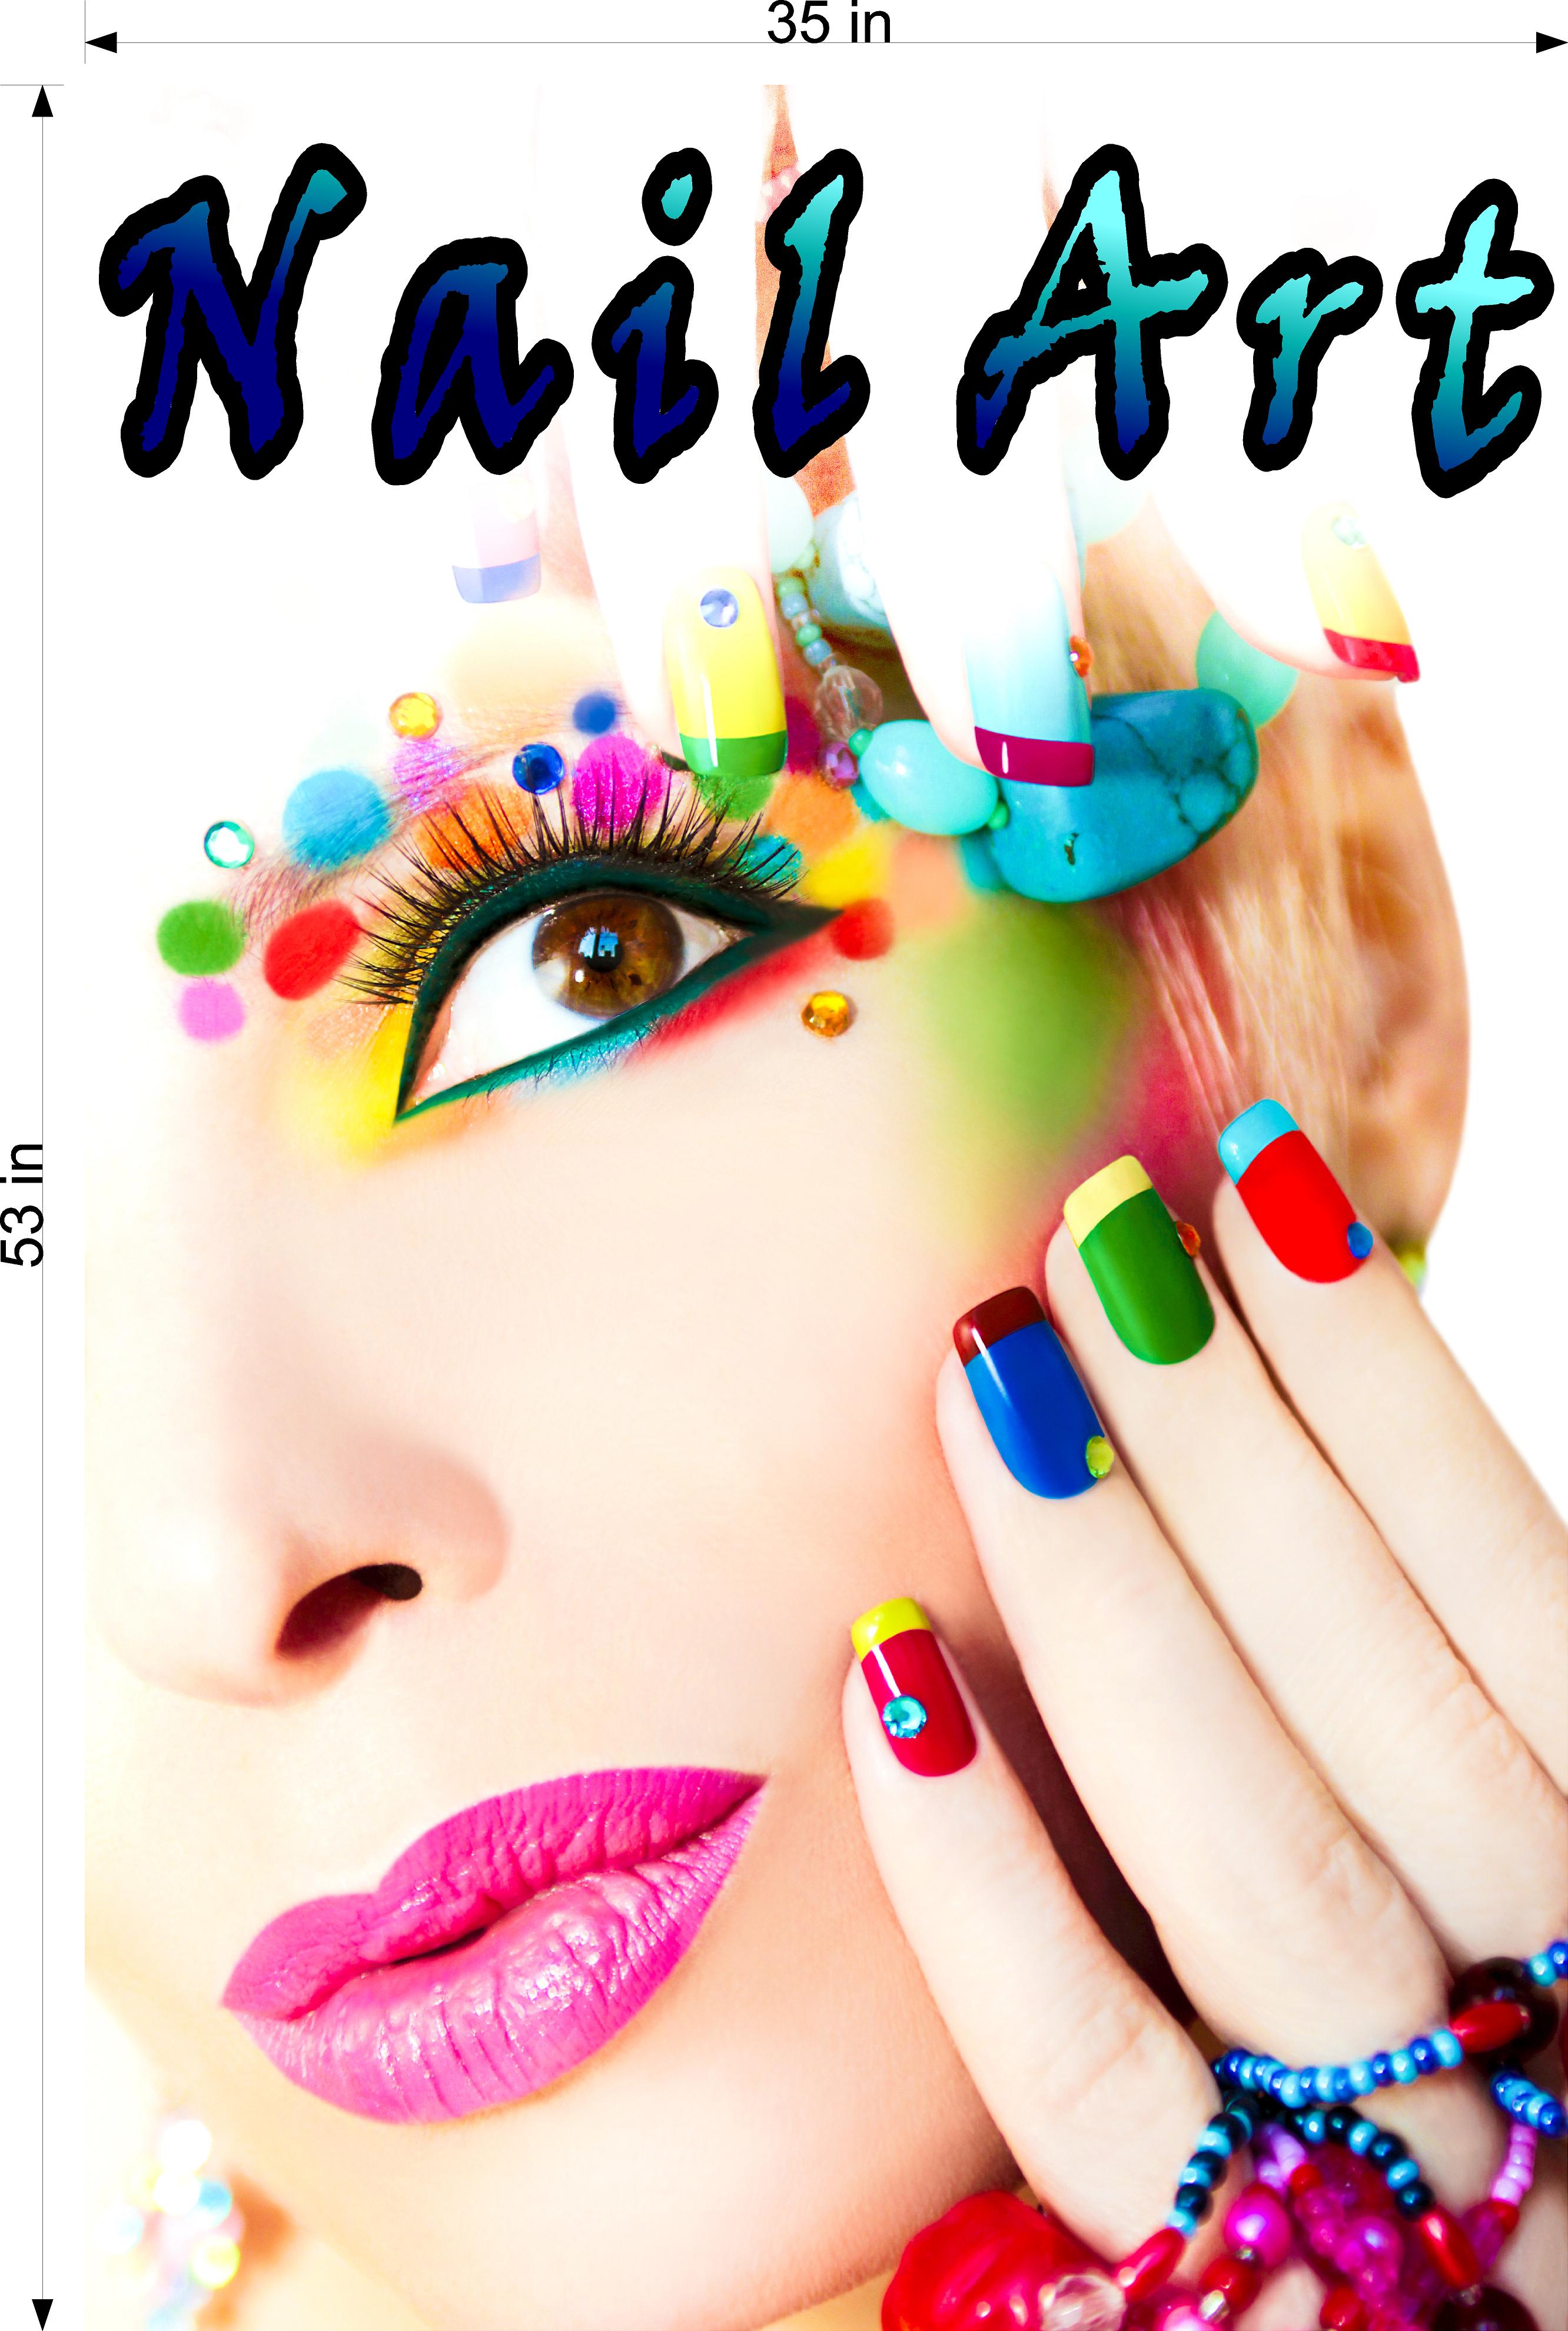 Nail Art Manicure Wallpaper Fashion Design Stock Photo 750902416 |  Shutterstock